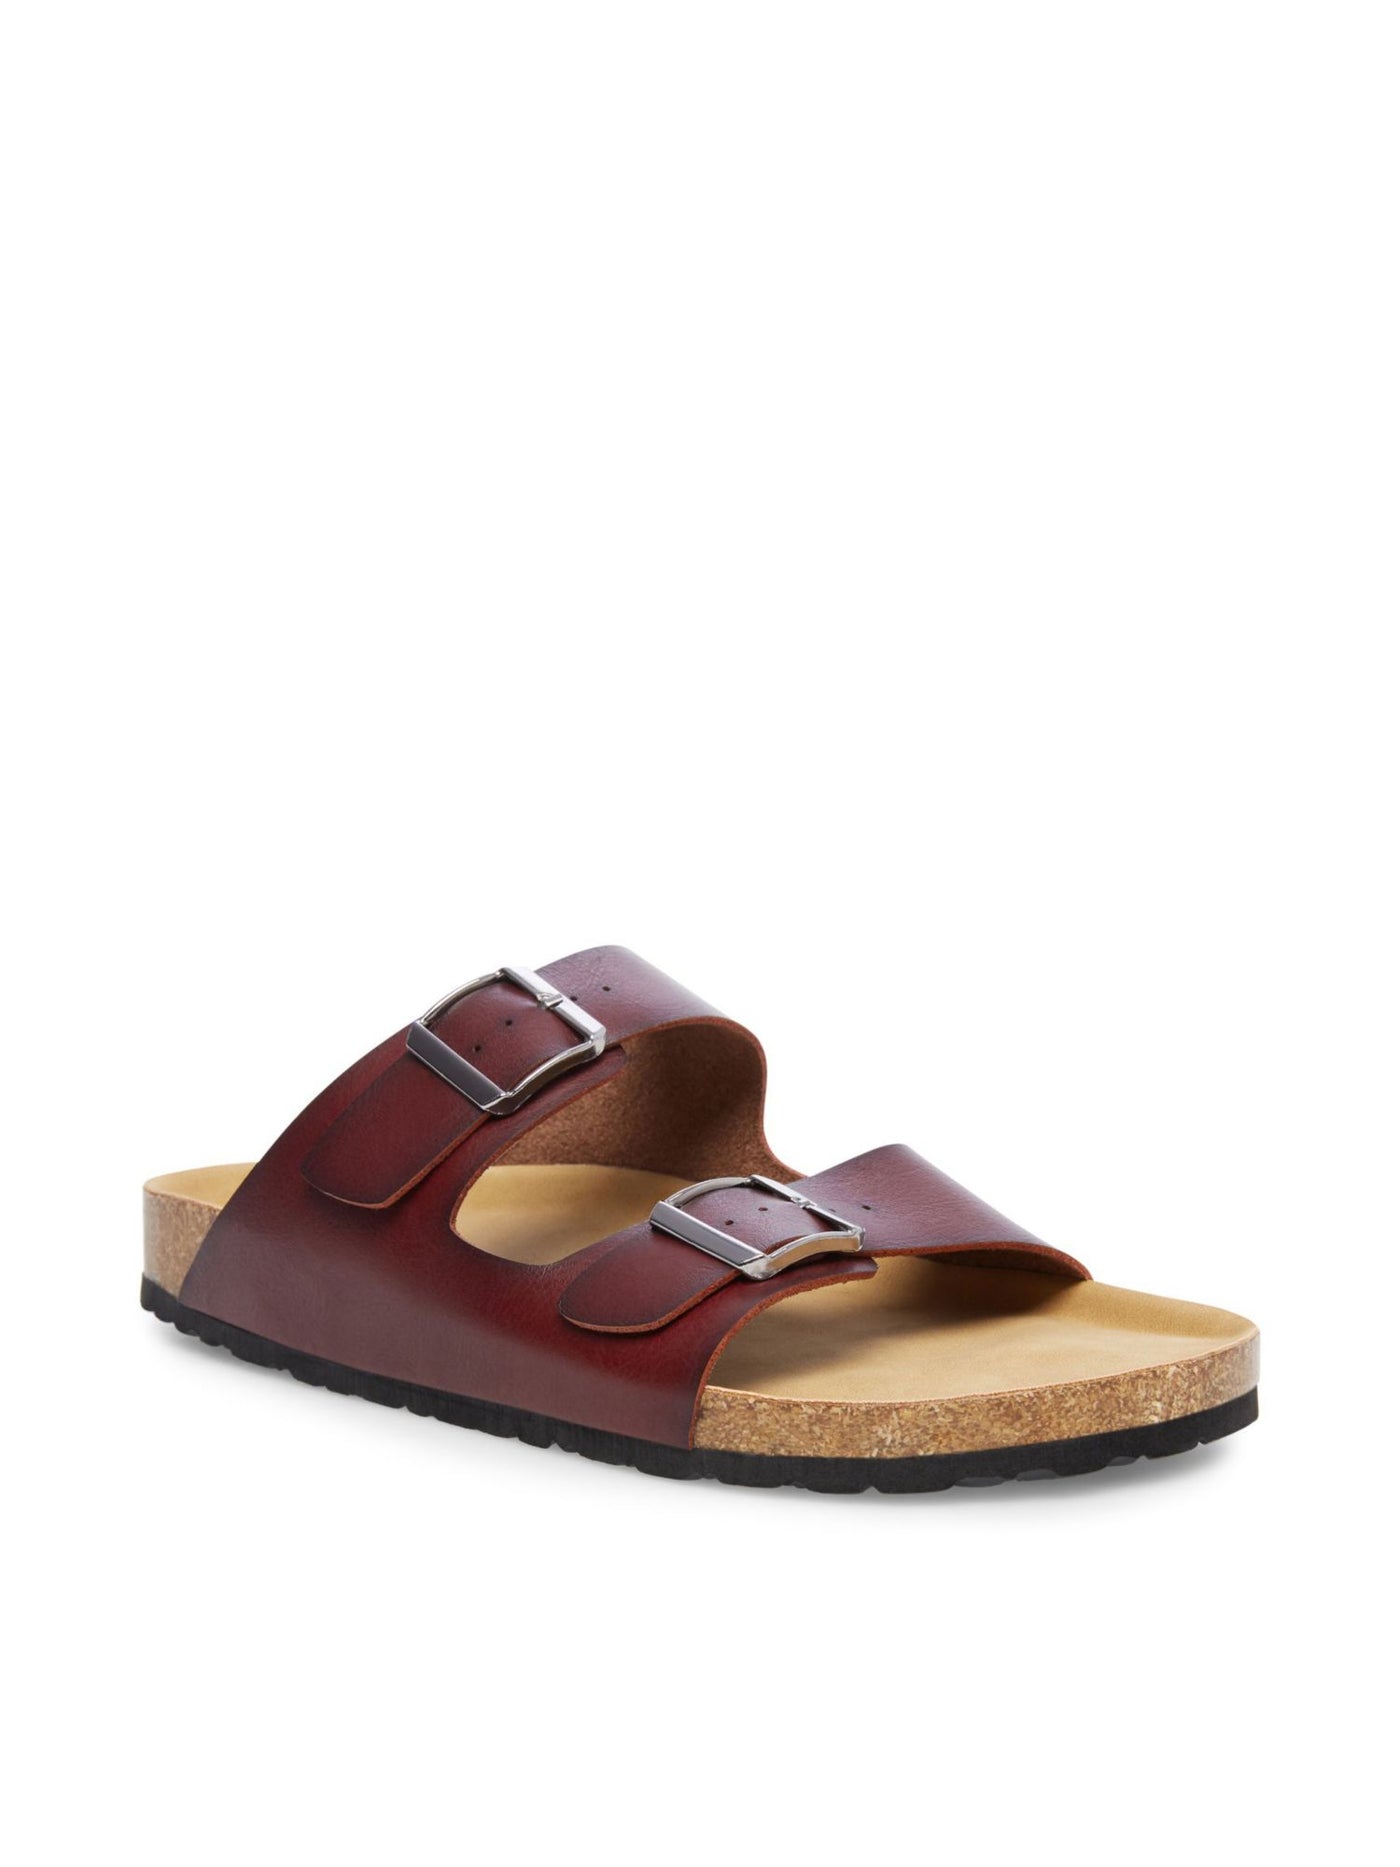 MADDEN Mens Maroon Adjustable Padded Tafted Open Toe Buckle Slide Sandals Shoes 13